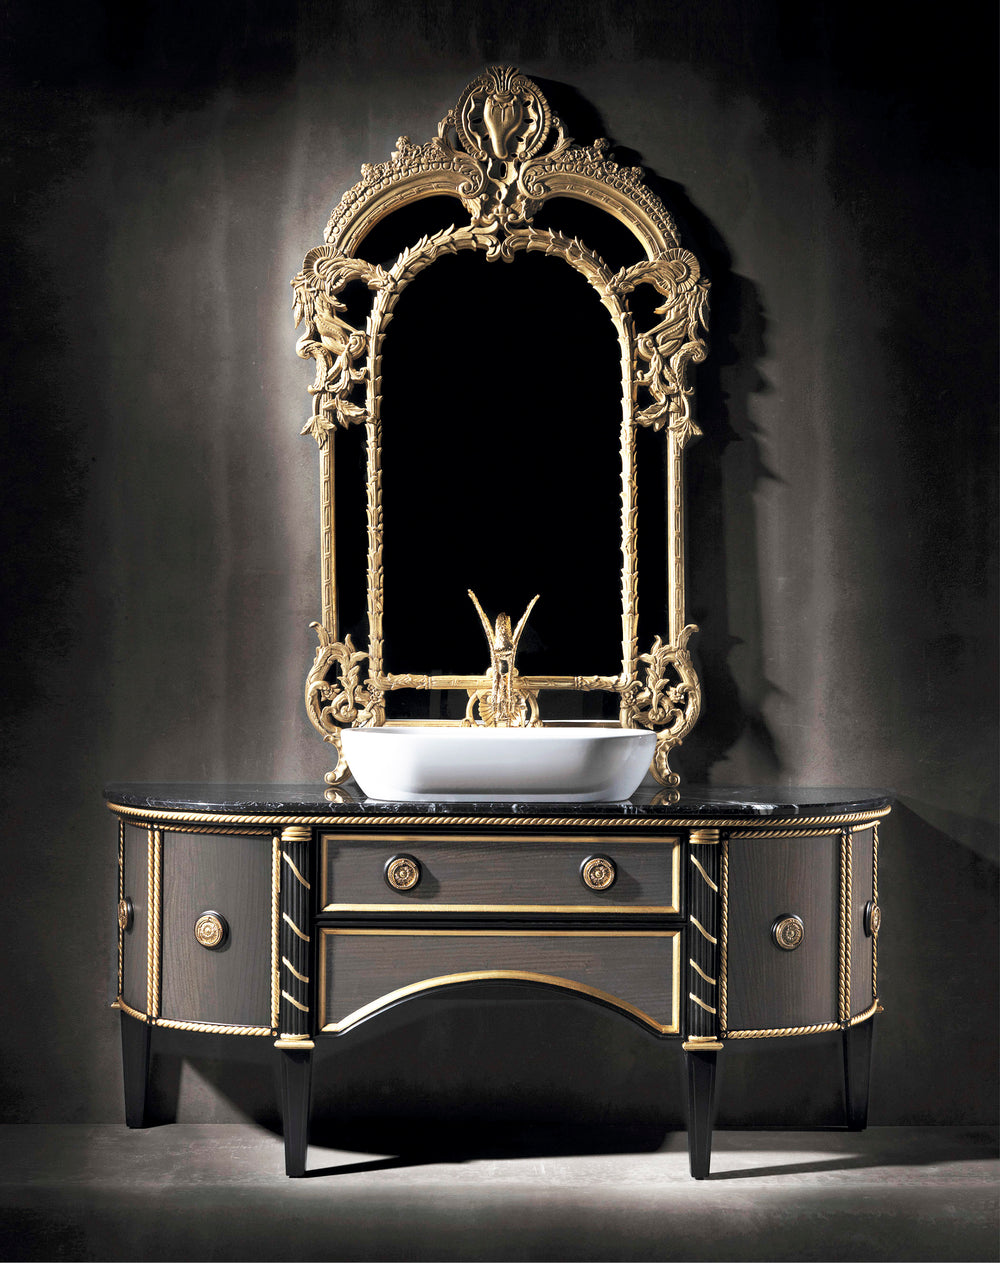 Randa Classic Bathroom Vanity 71". Single sink traditional luxury bathroom vanity